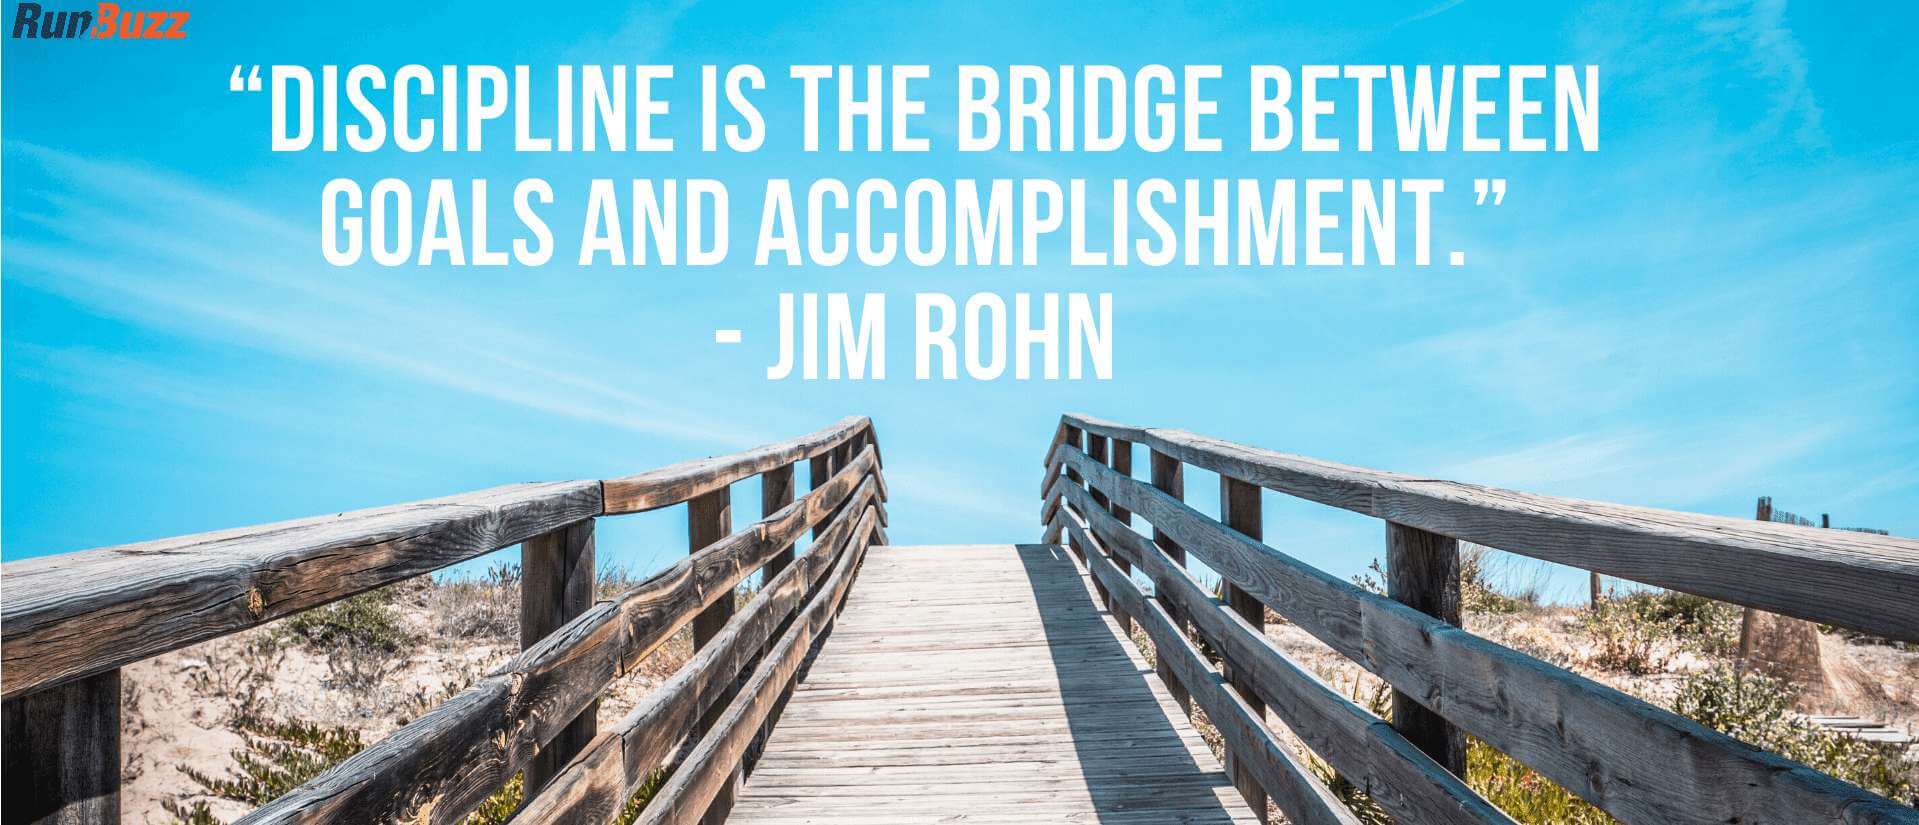  “Discipline-is-the-bridge-between-goals-and-accomplishment.”-Jim-Rohn